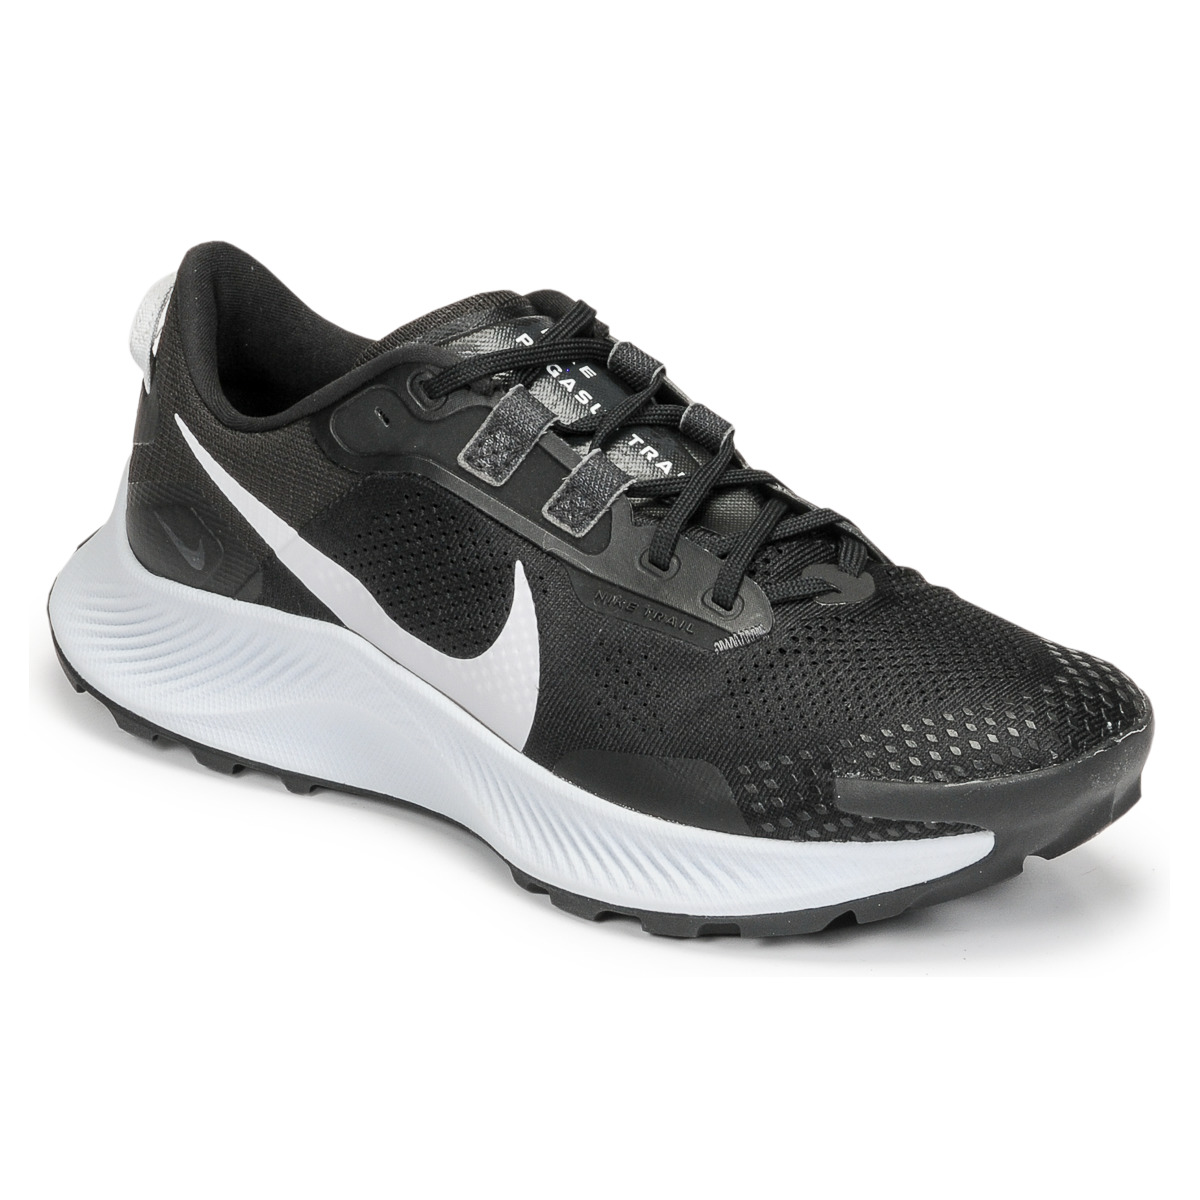 Schuhe Herren Laufschuhe Nike NIKE PEGASUS TRAIL 3 Schwarz / Silbern